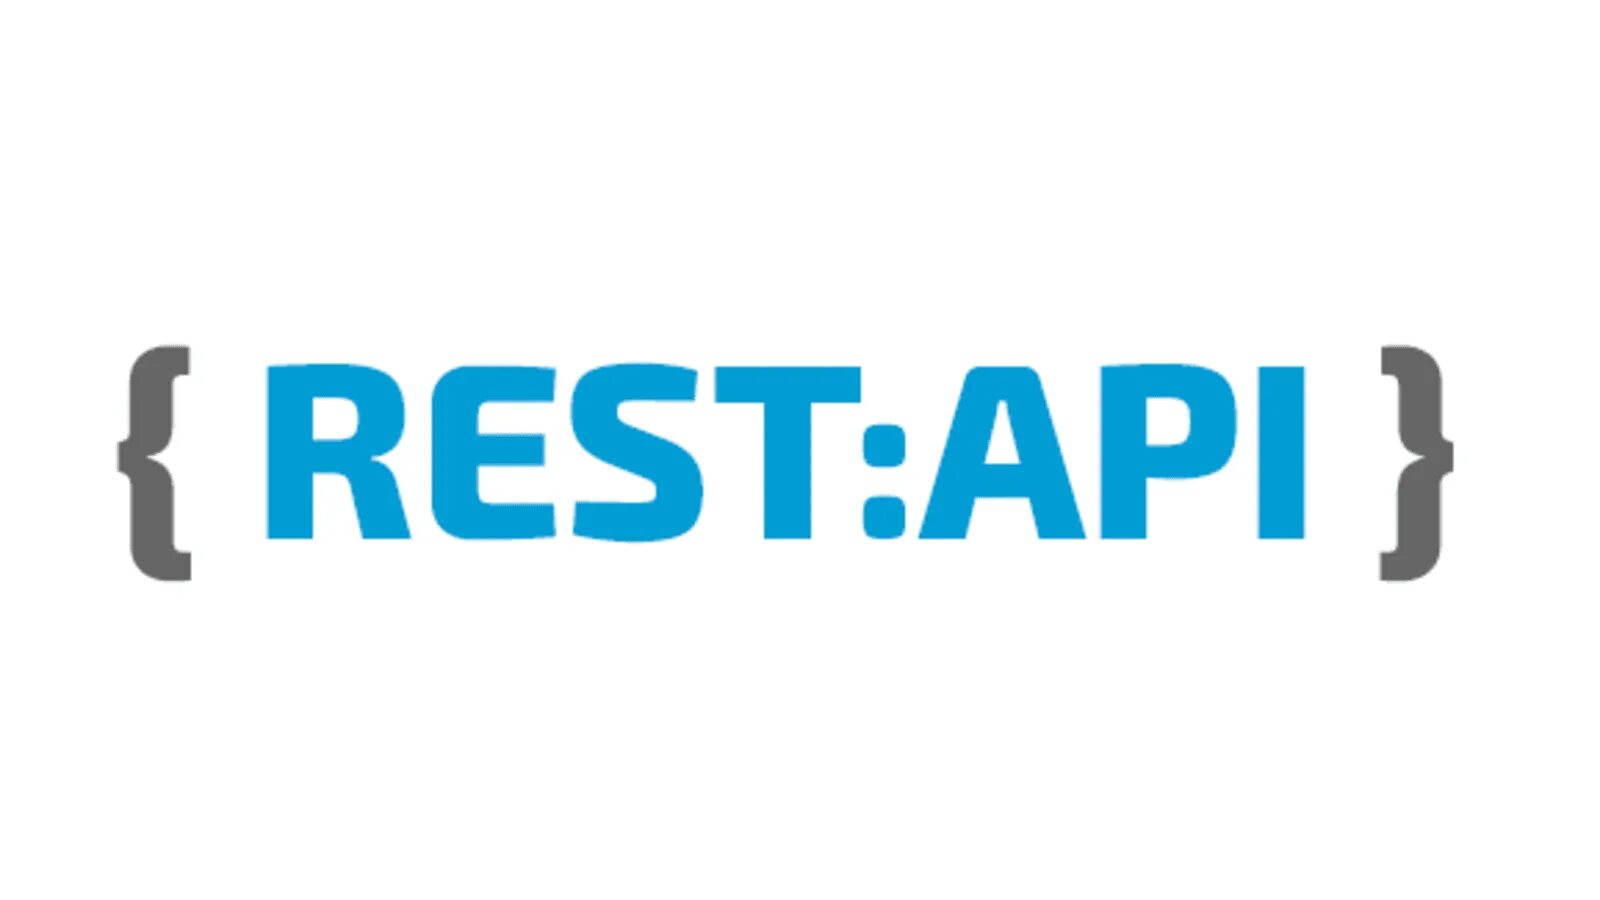 Rest API. Rest API картинка. Rest сервис. Rest API logo.